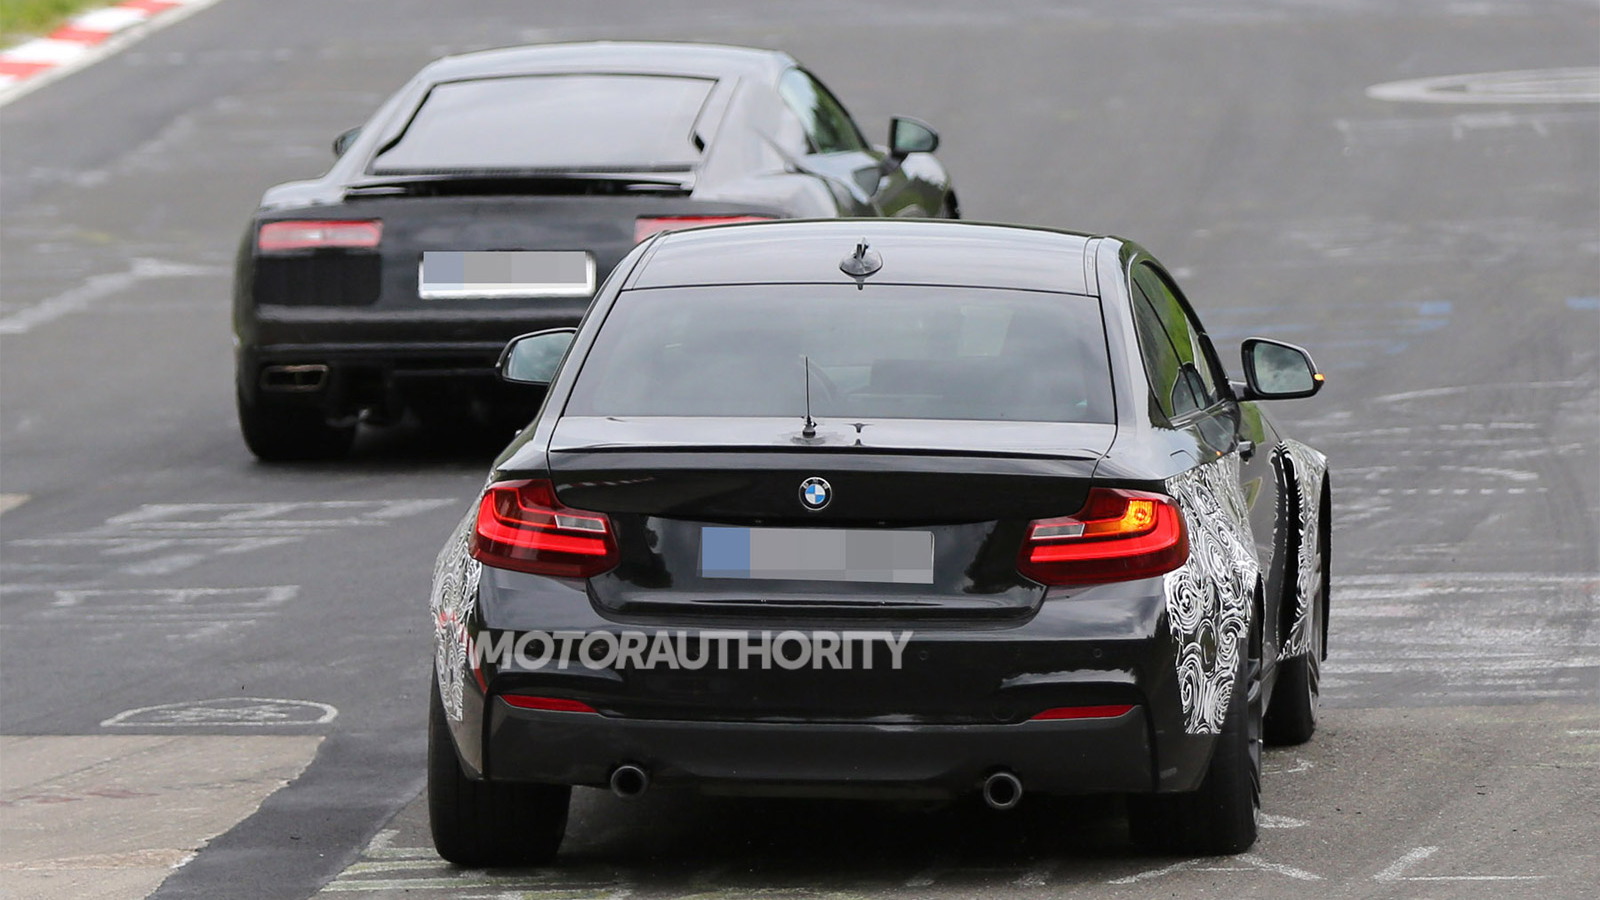 2016 BMW M2 spy shots - Image via S. Baldauf/SB-Medien